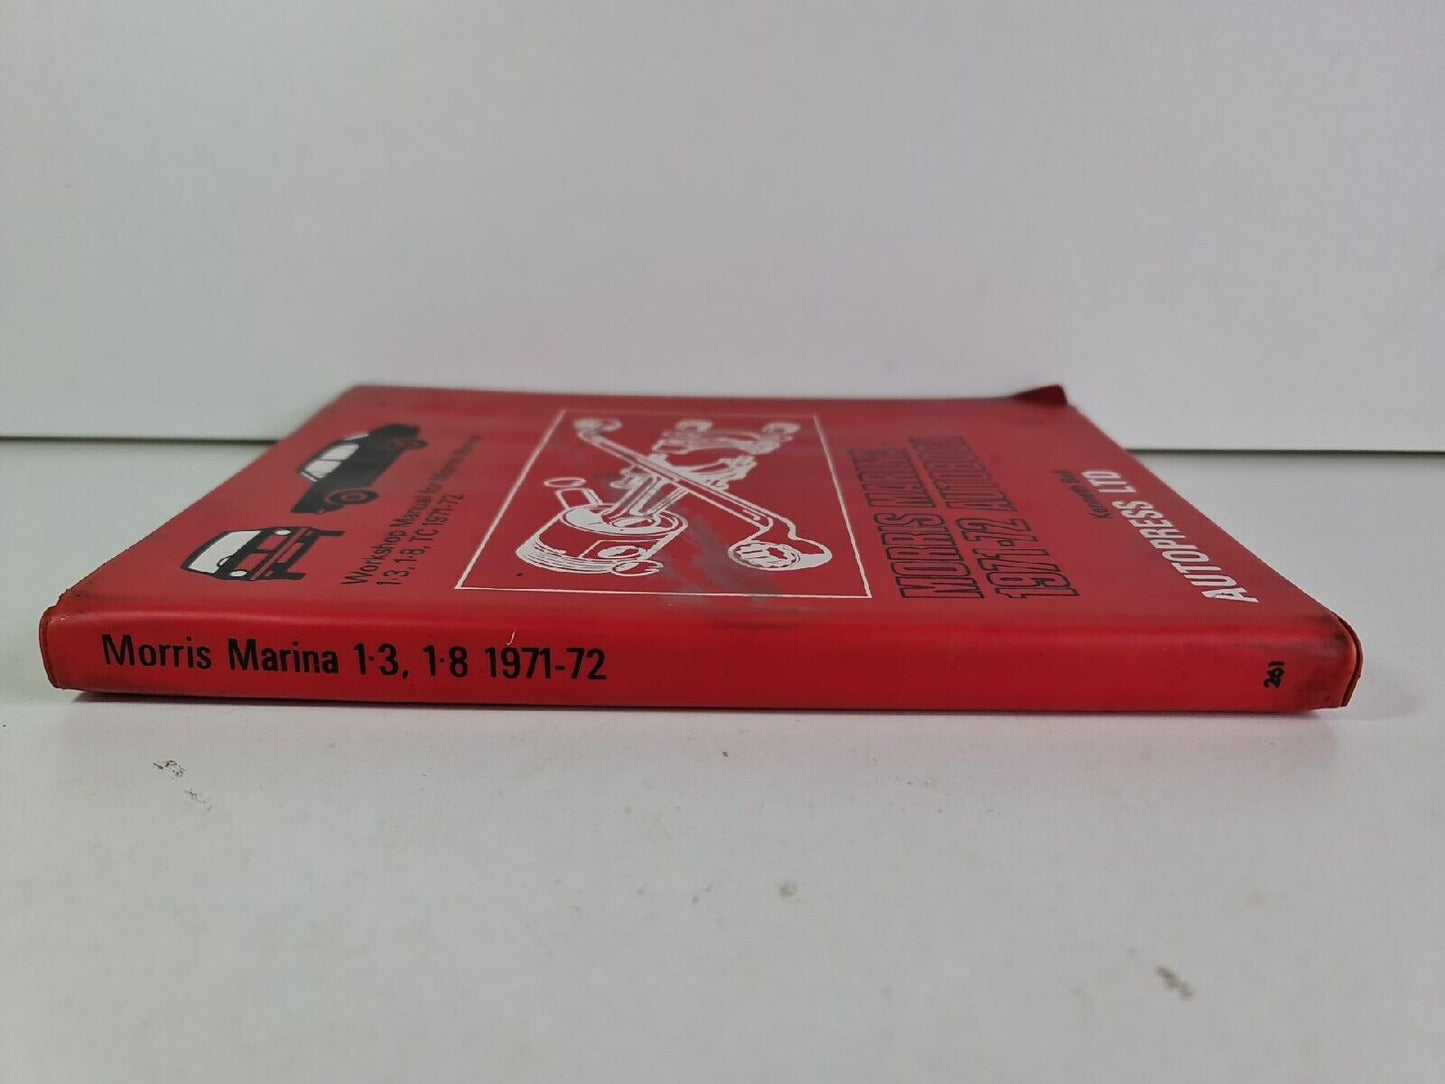 Morris Marina 1971-72 Autobook by Kenneth Ball (1972)